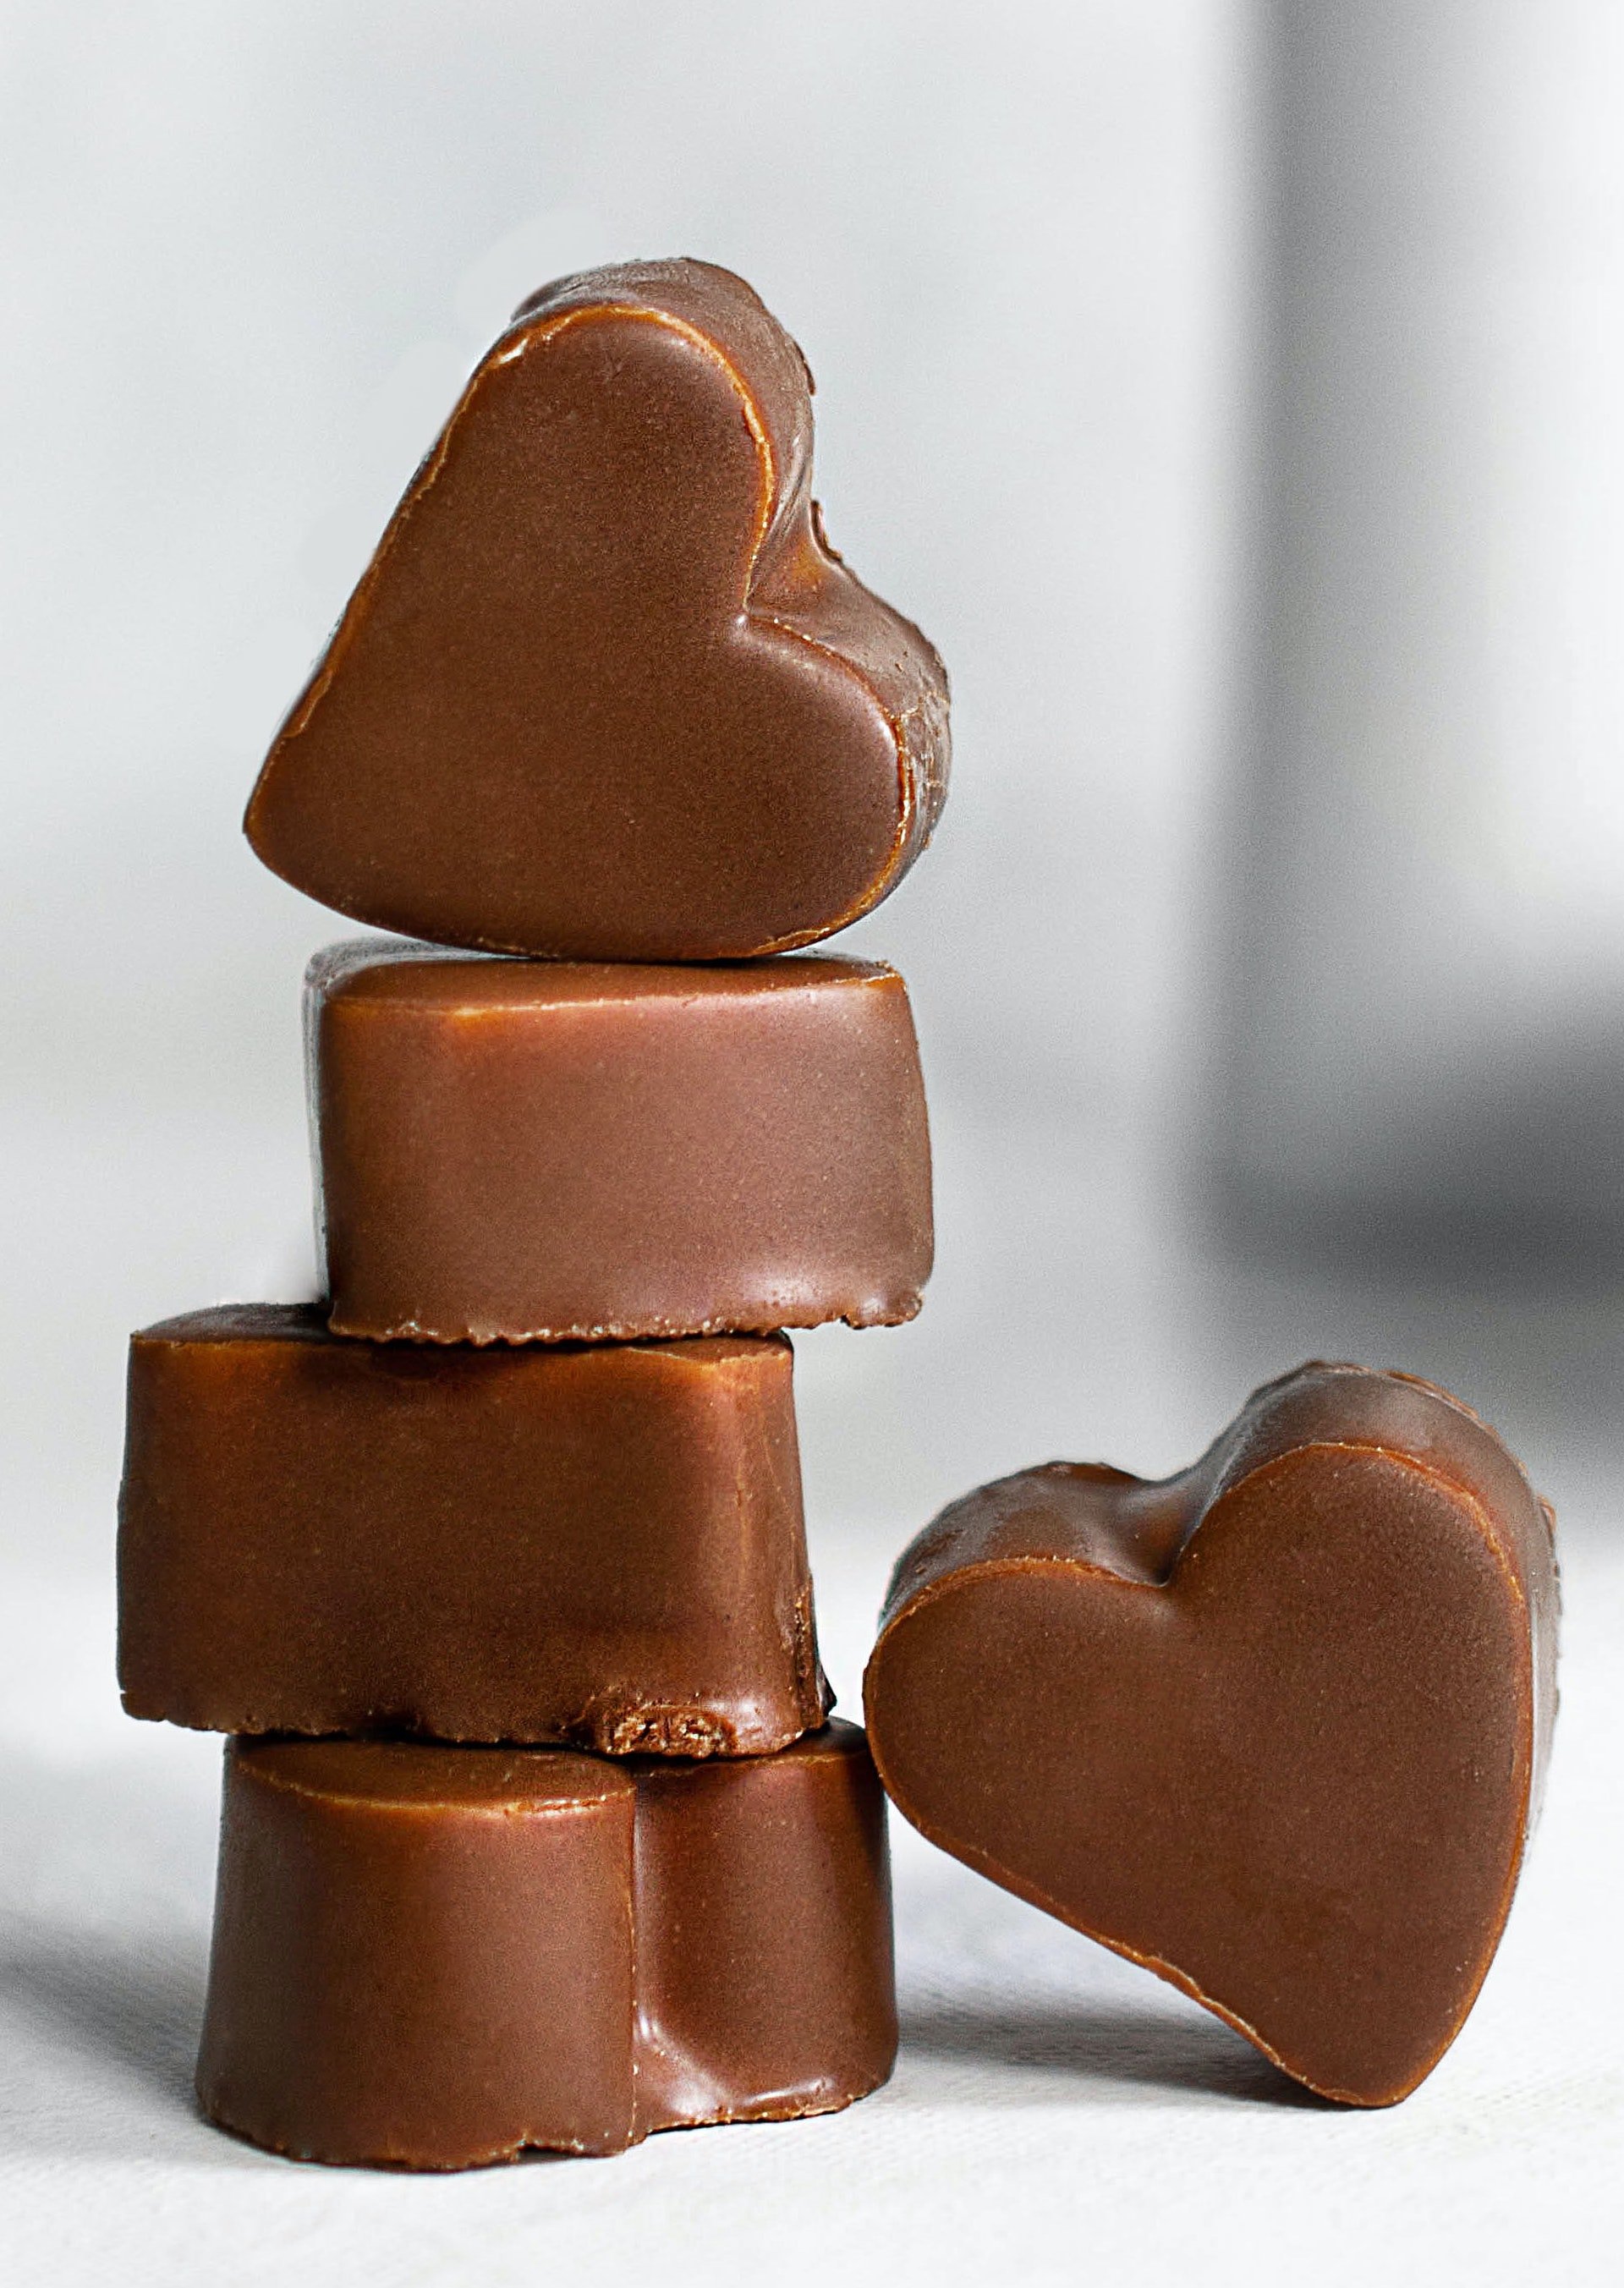 loveheart chocolates.jpg